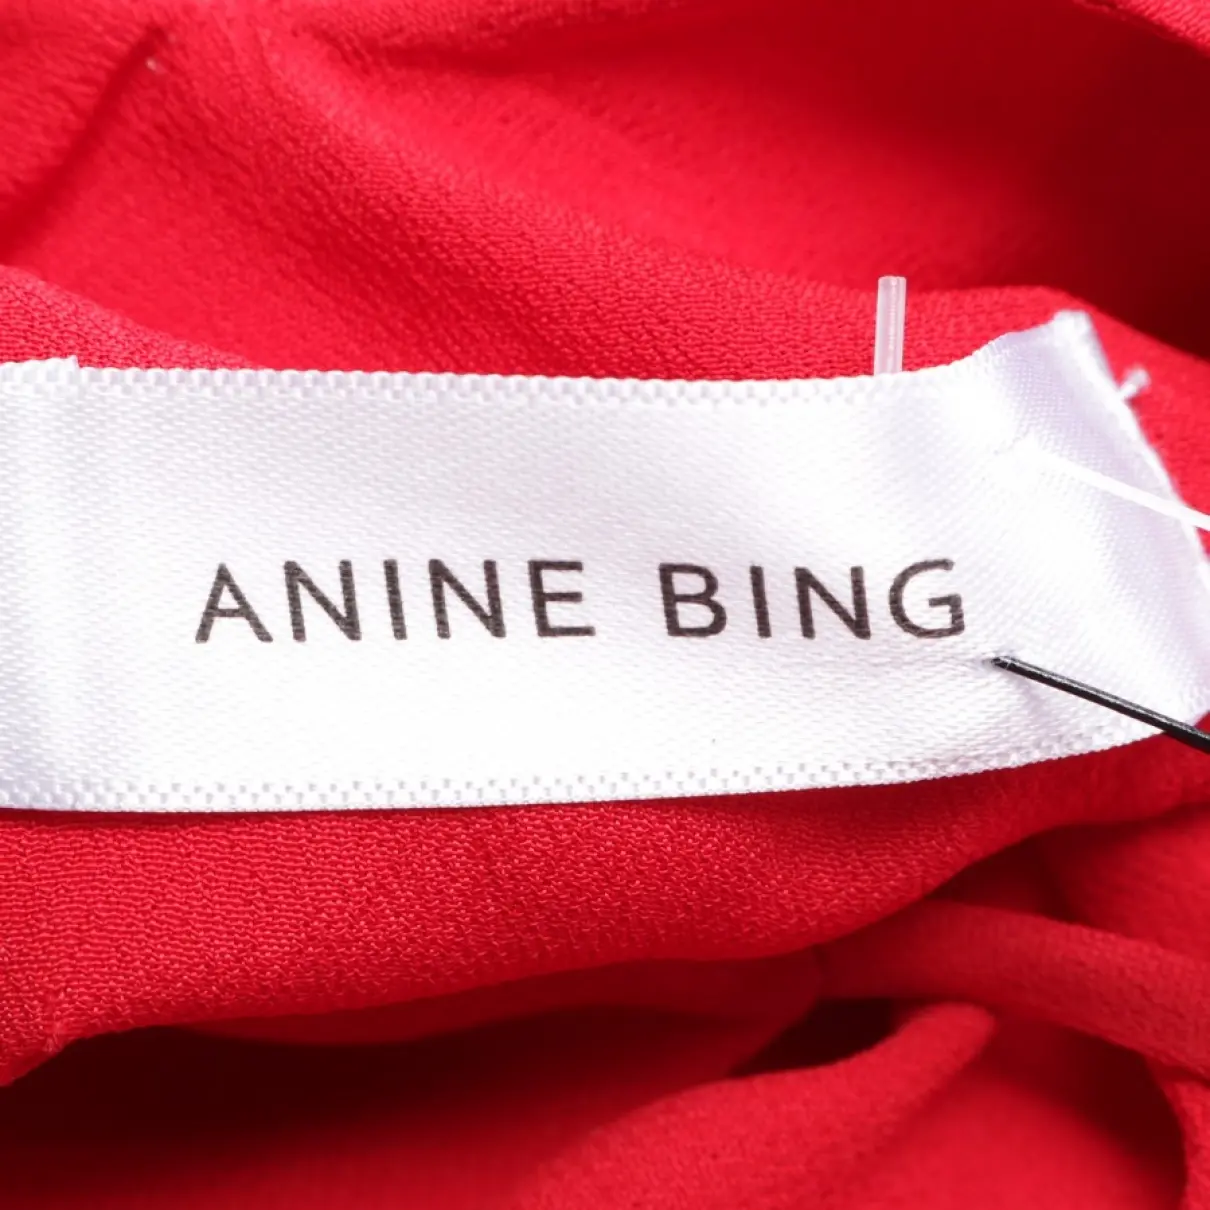 Buy Anine Bing Dress online